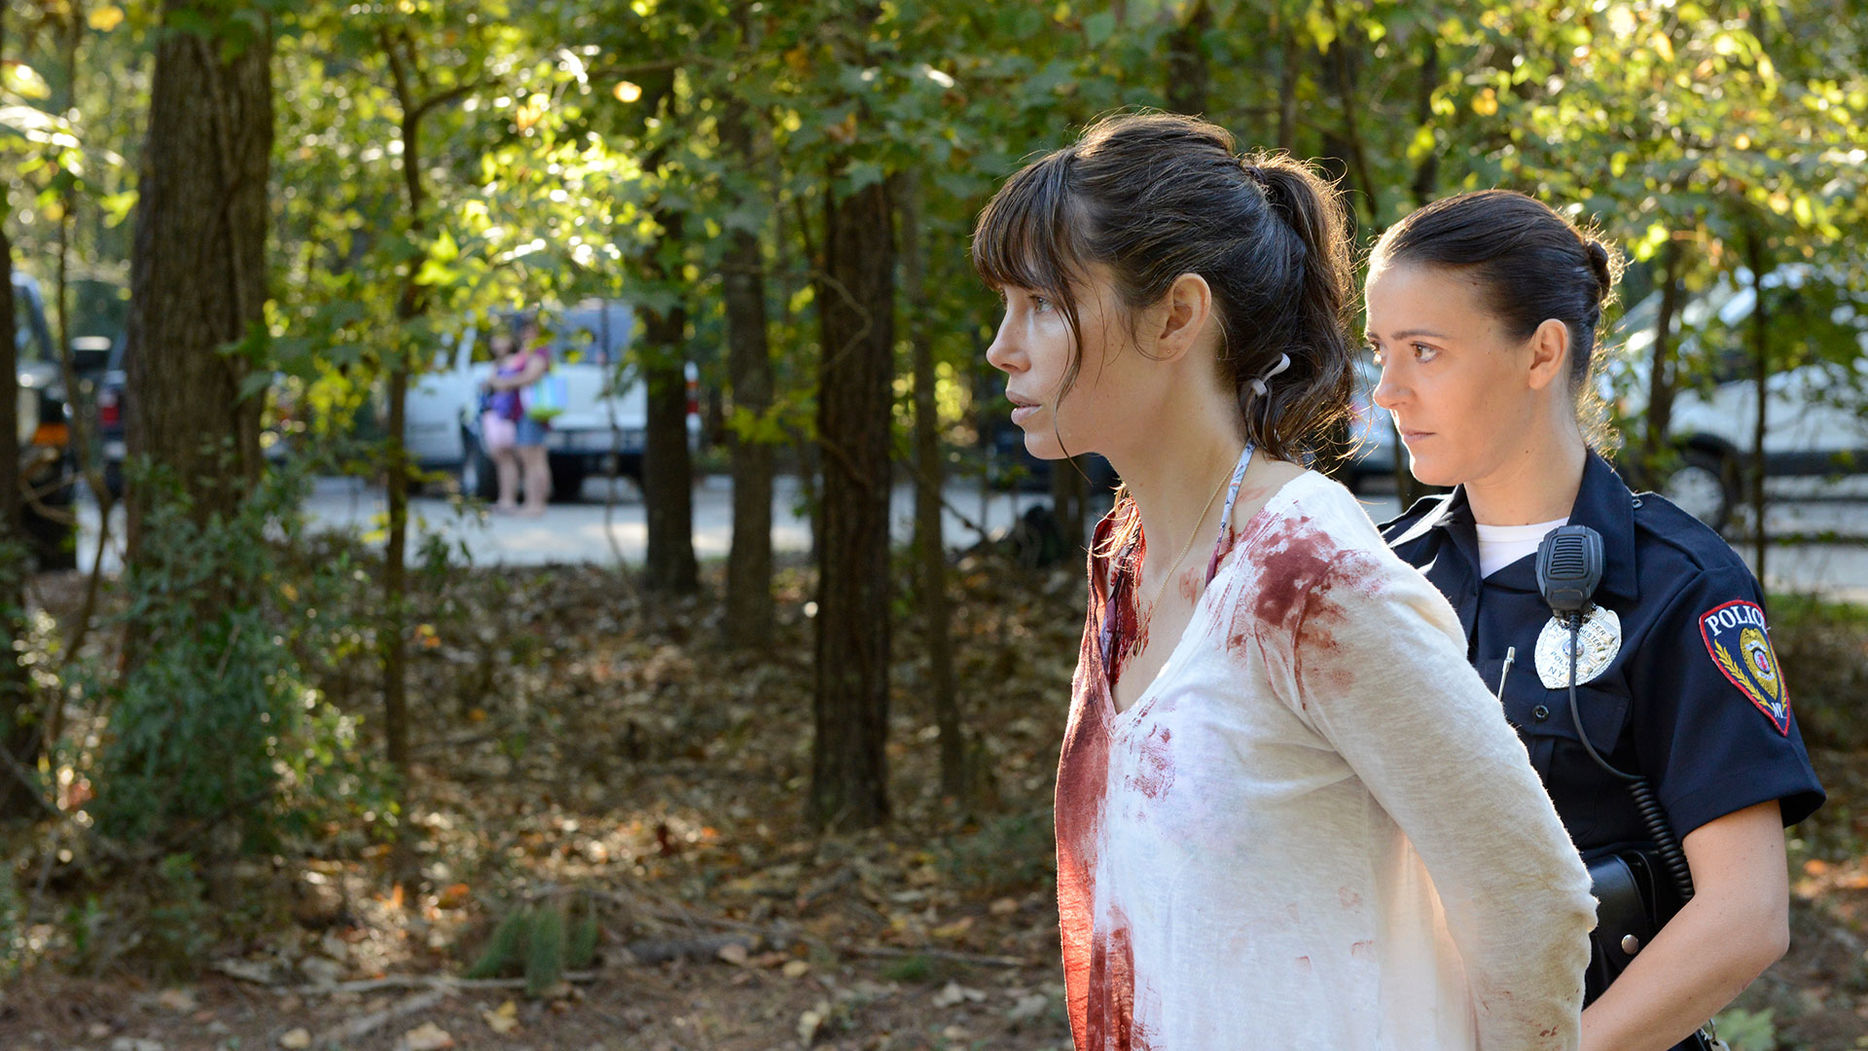 Jessica Biel (Cora Tannetti) stars in Part I of The Sinner Photo credit: USA Network